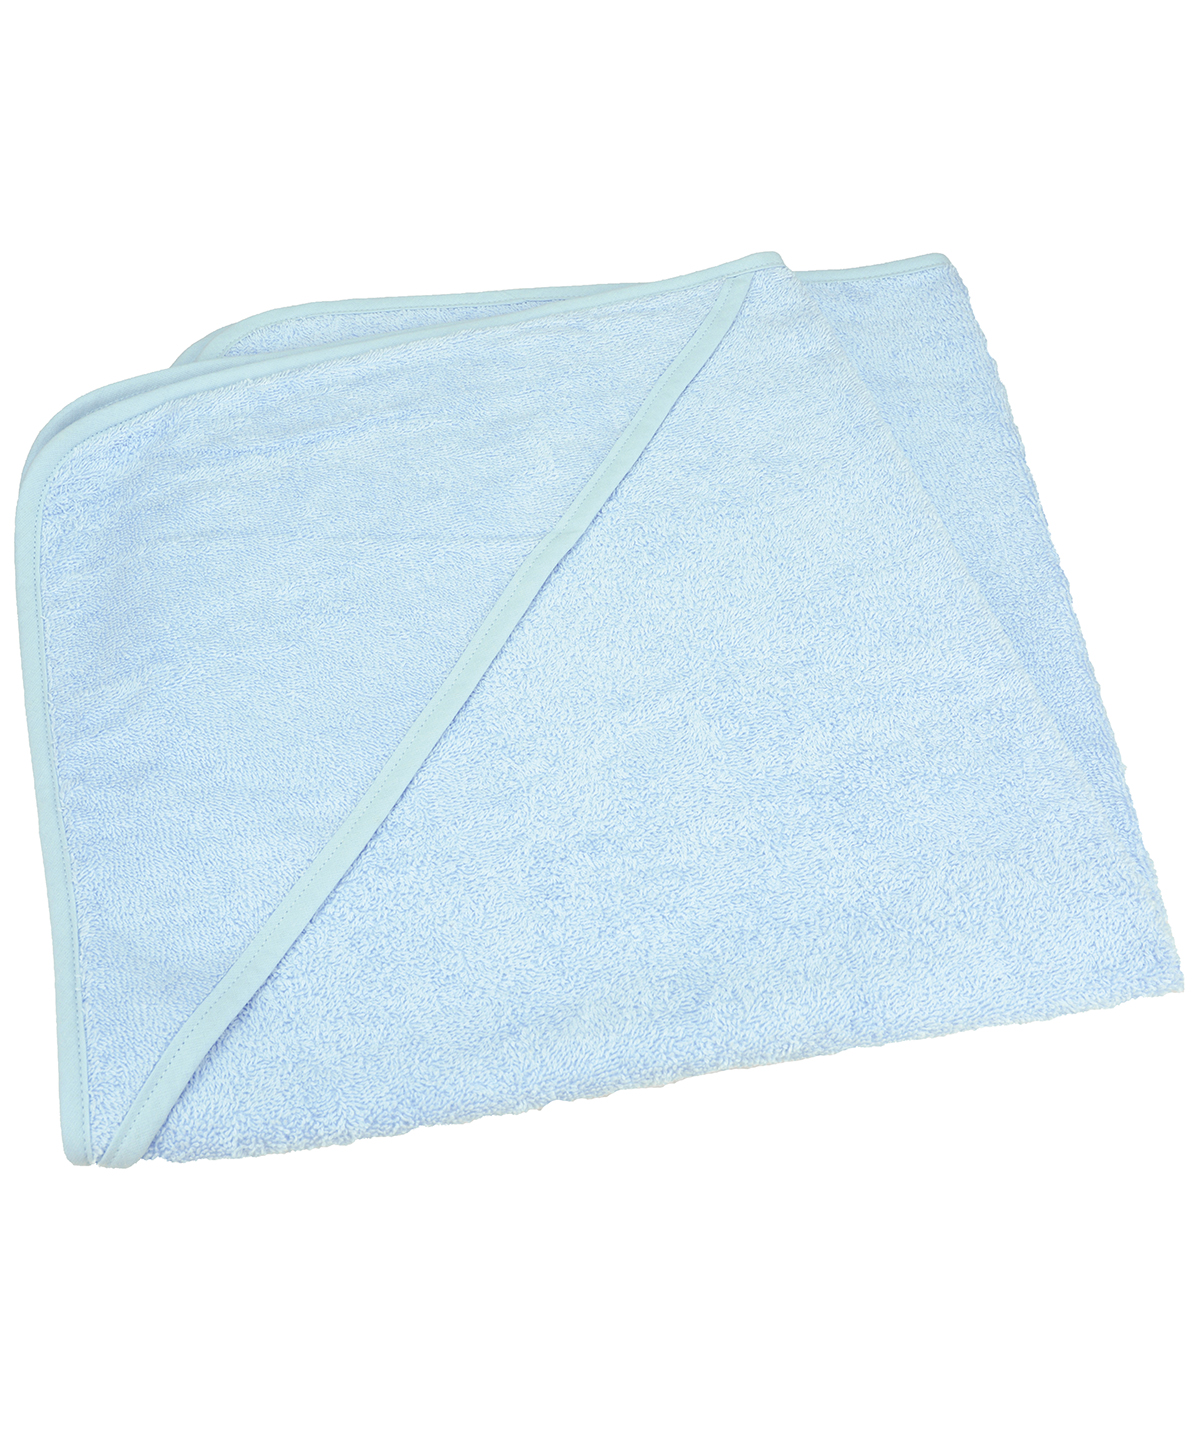 Babiezz® Medium Baby Hooded Towel Light Blue/Light Blue/Light Blue Size One Size